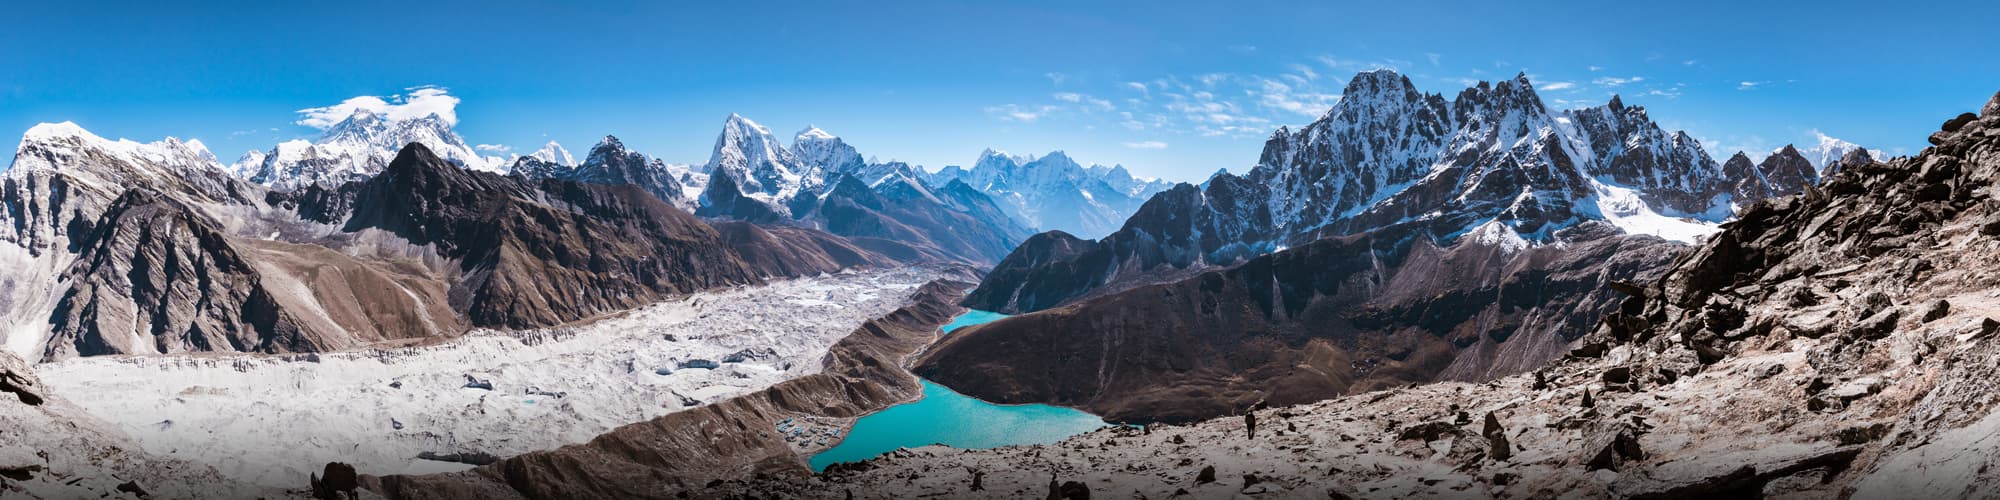 Voyage en groupe Népal © Thrithot / Adobe Stock